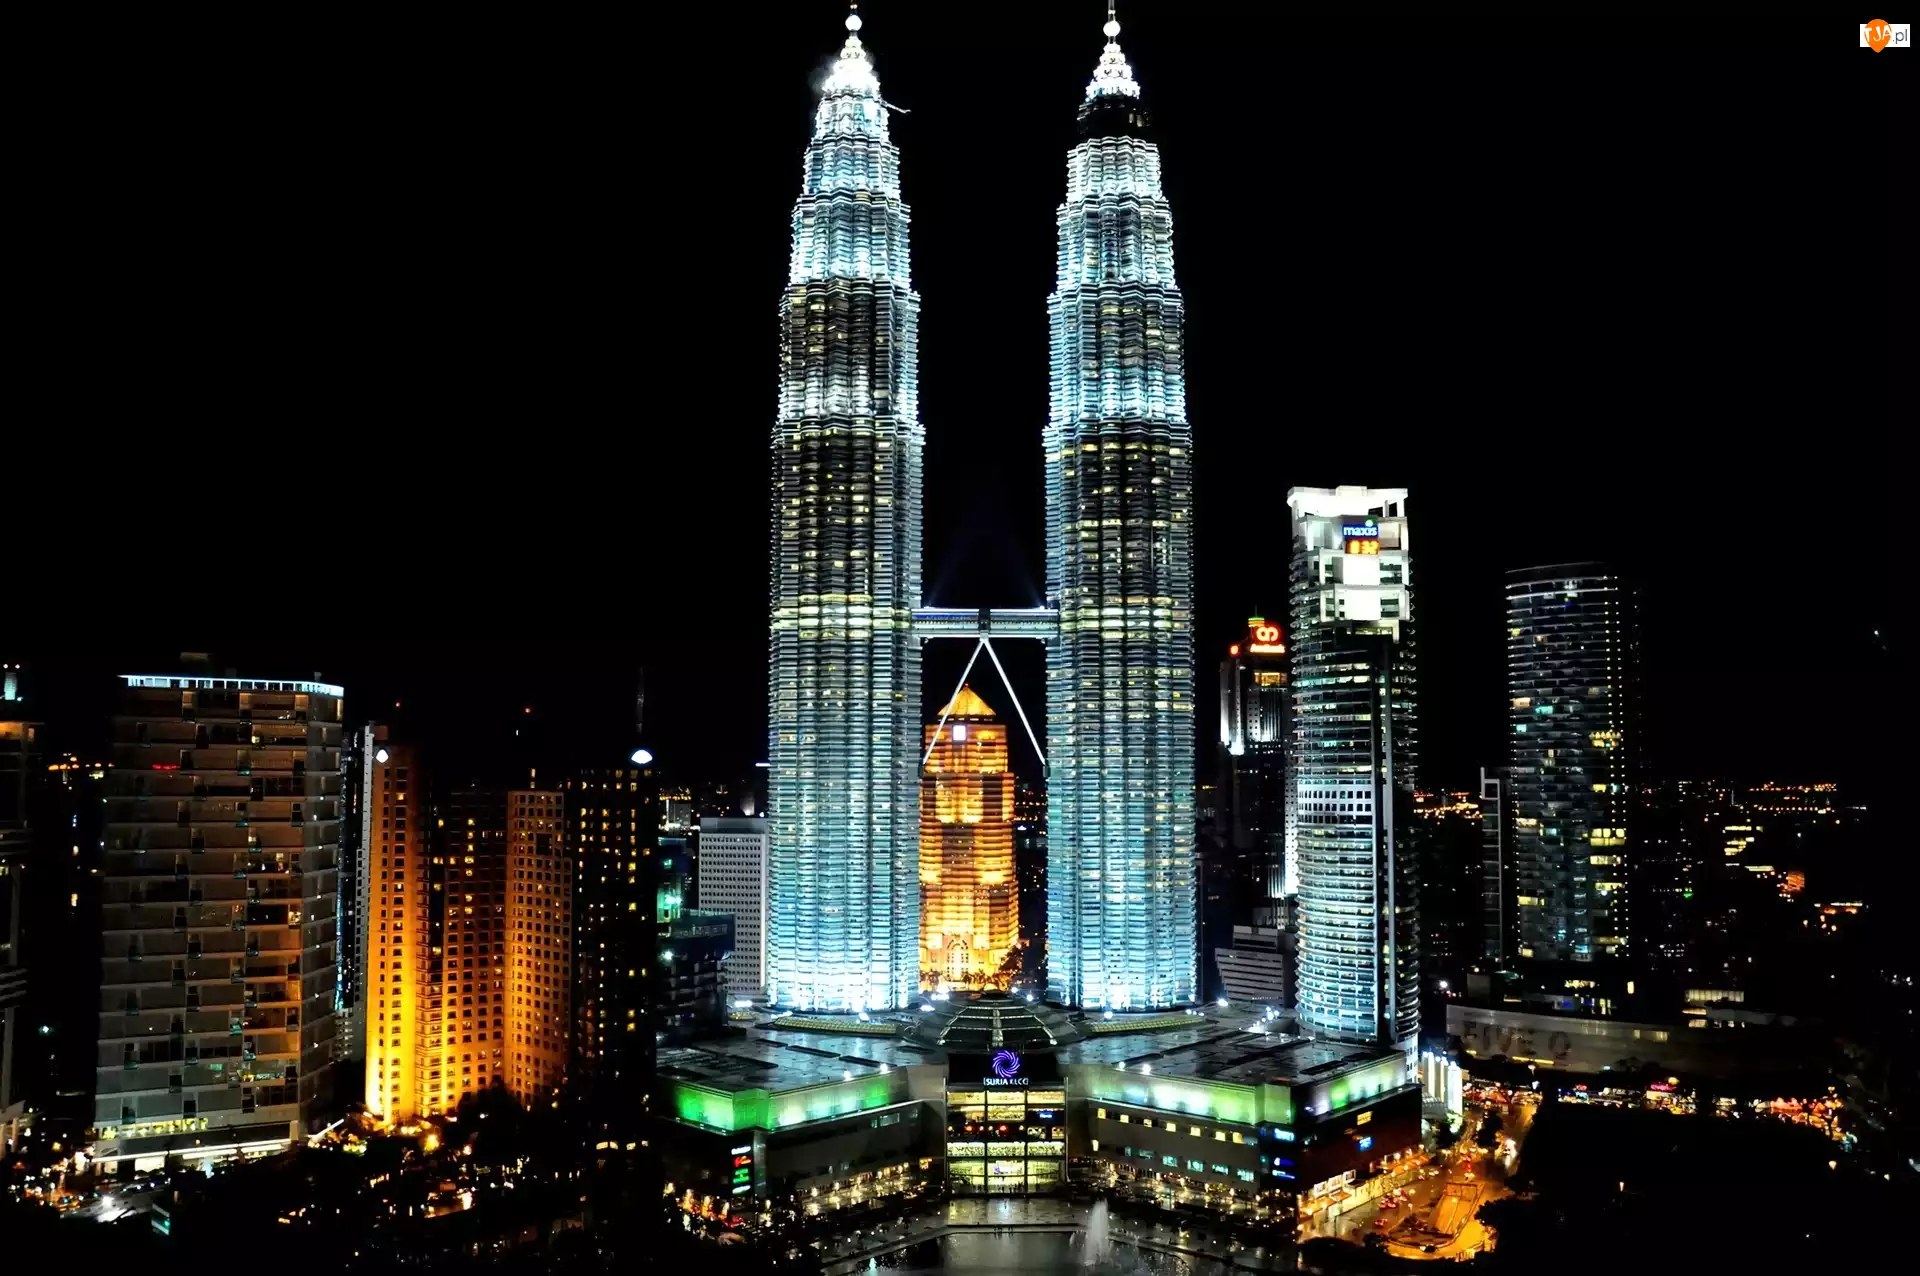 Noc, Malezja, Kuala Lumpur, Petronas Towers